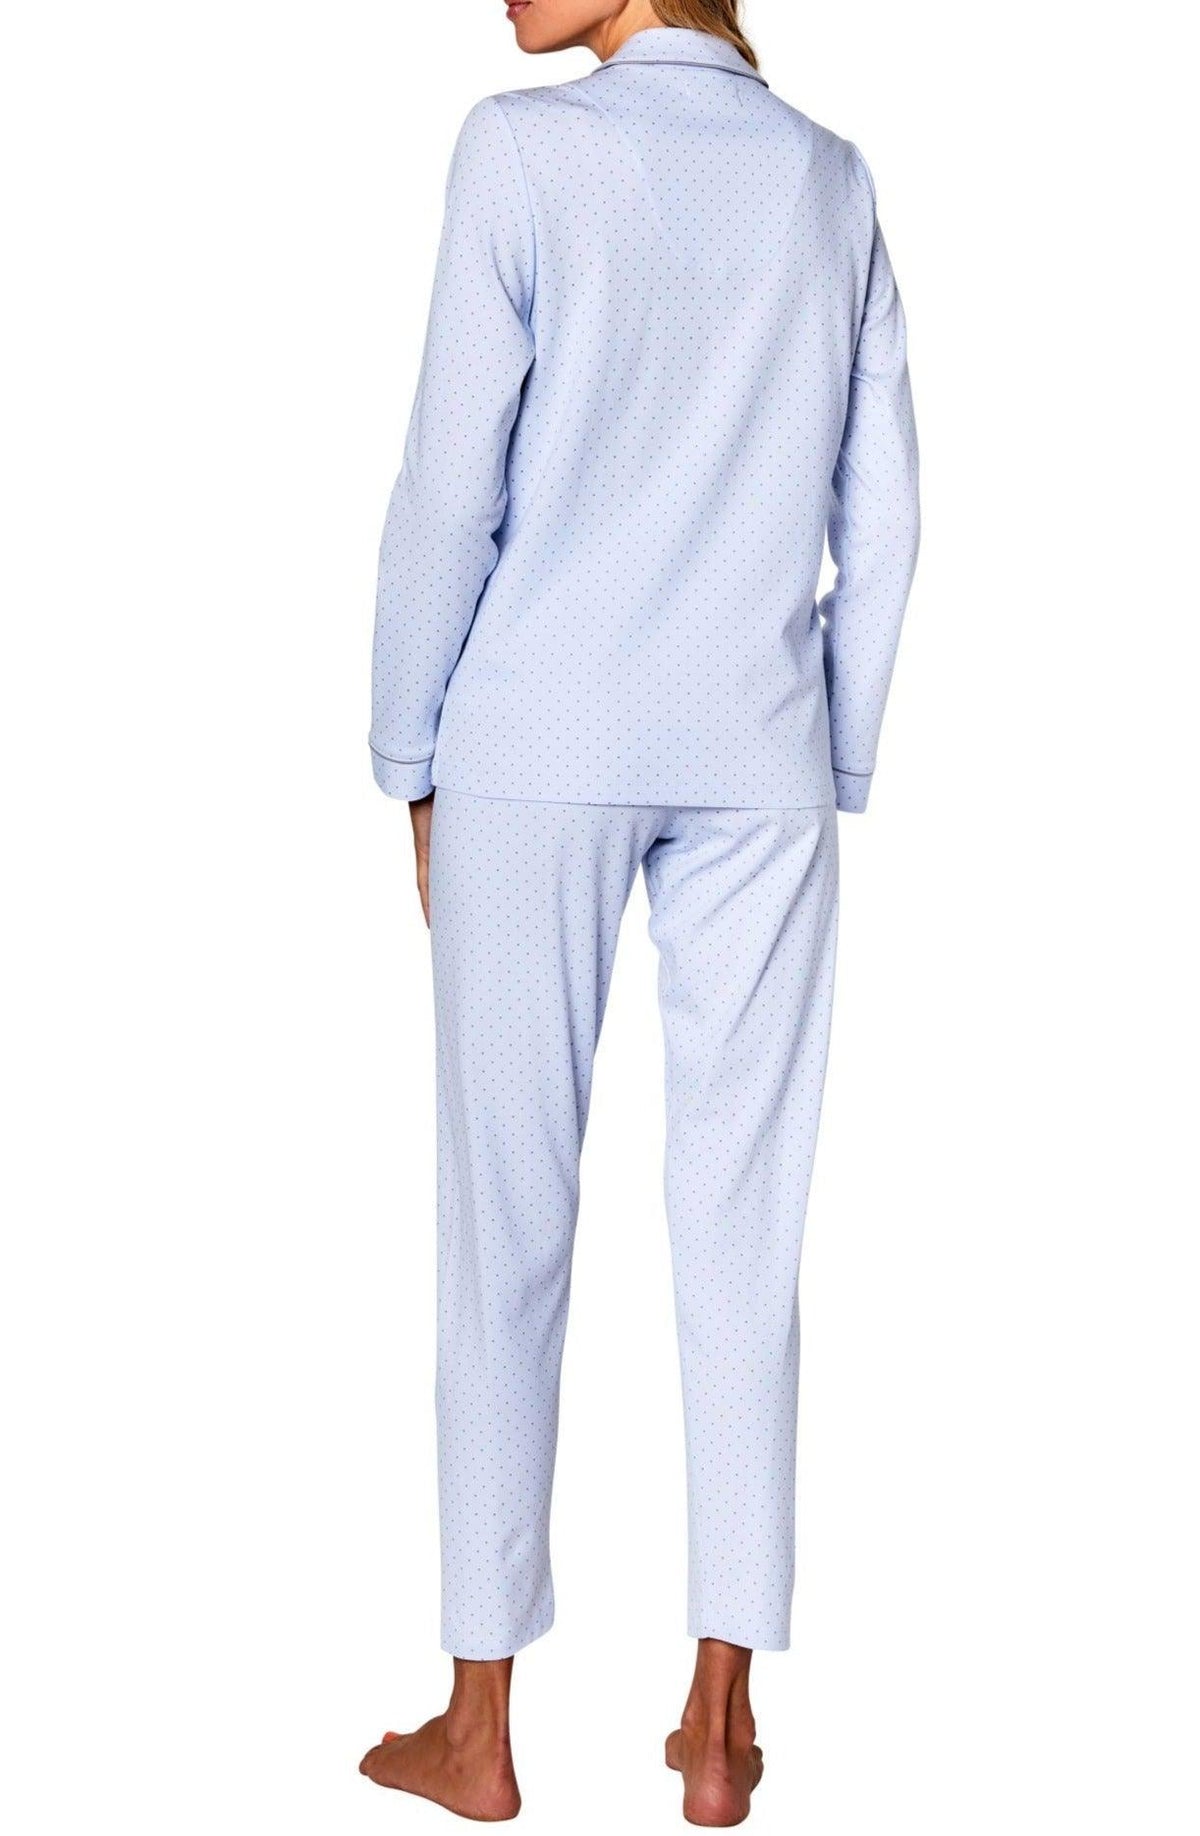 Lisa Long Sleeve Polka Dot PJ Set - Sales Rack - Marelle Sleepwear